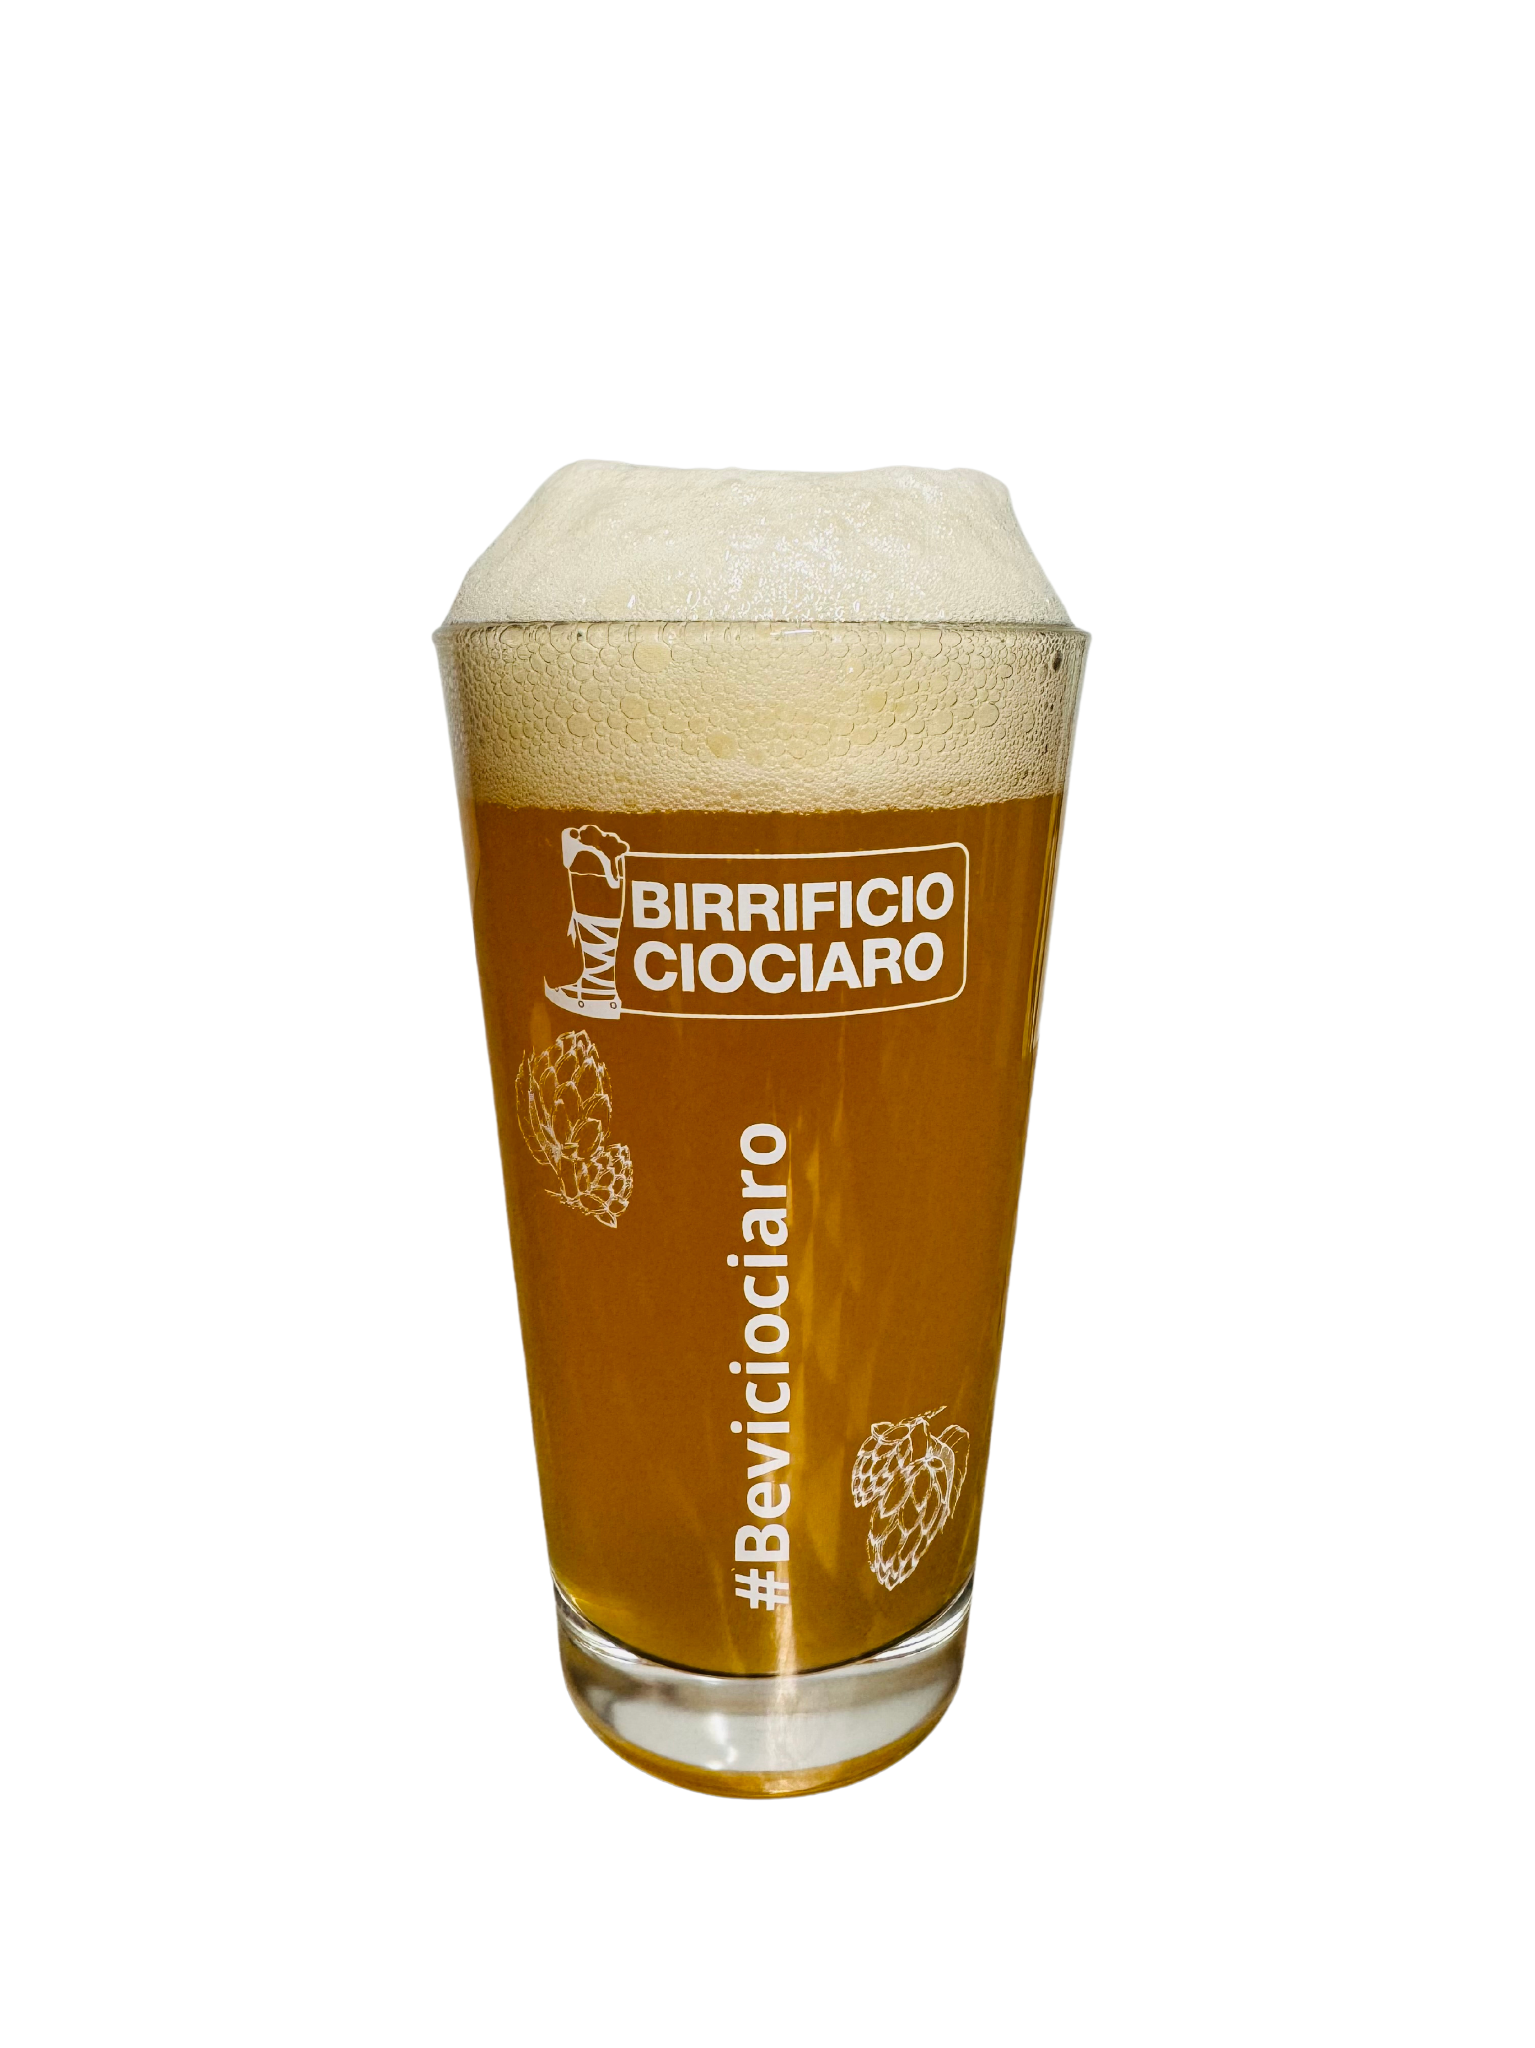 Featured image for “Bicchiere personalizzato 330 ml”